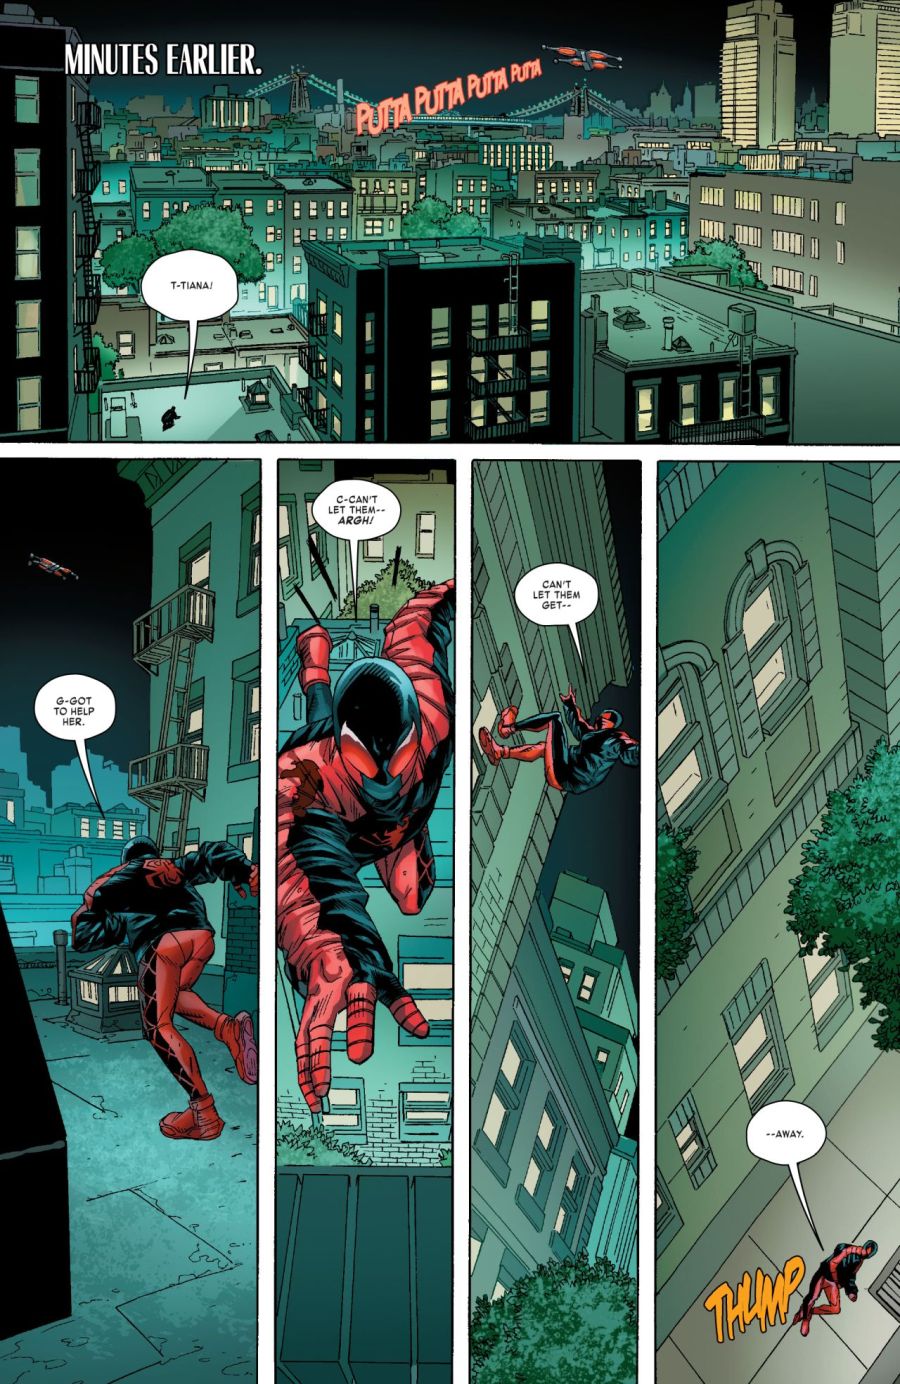 Miles Morales: Spider-Man #32